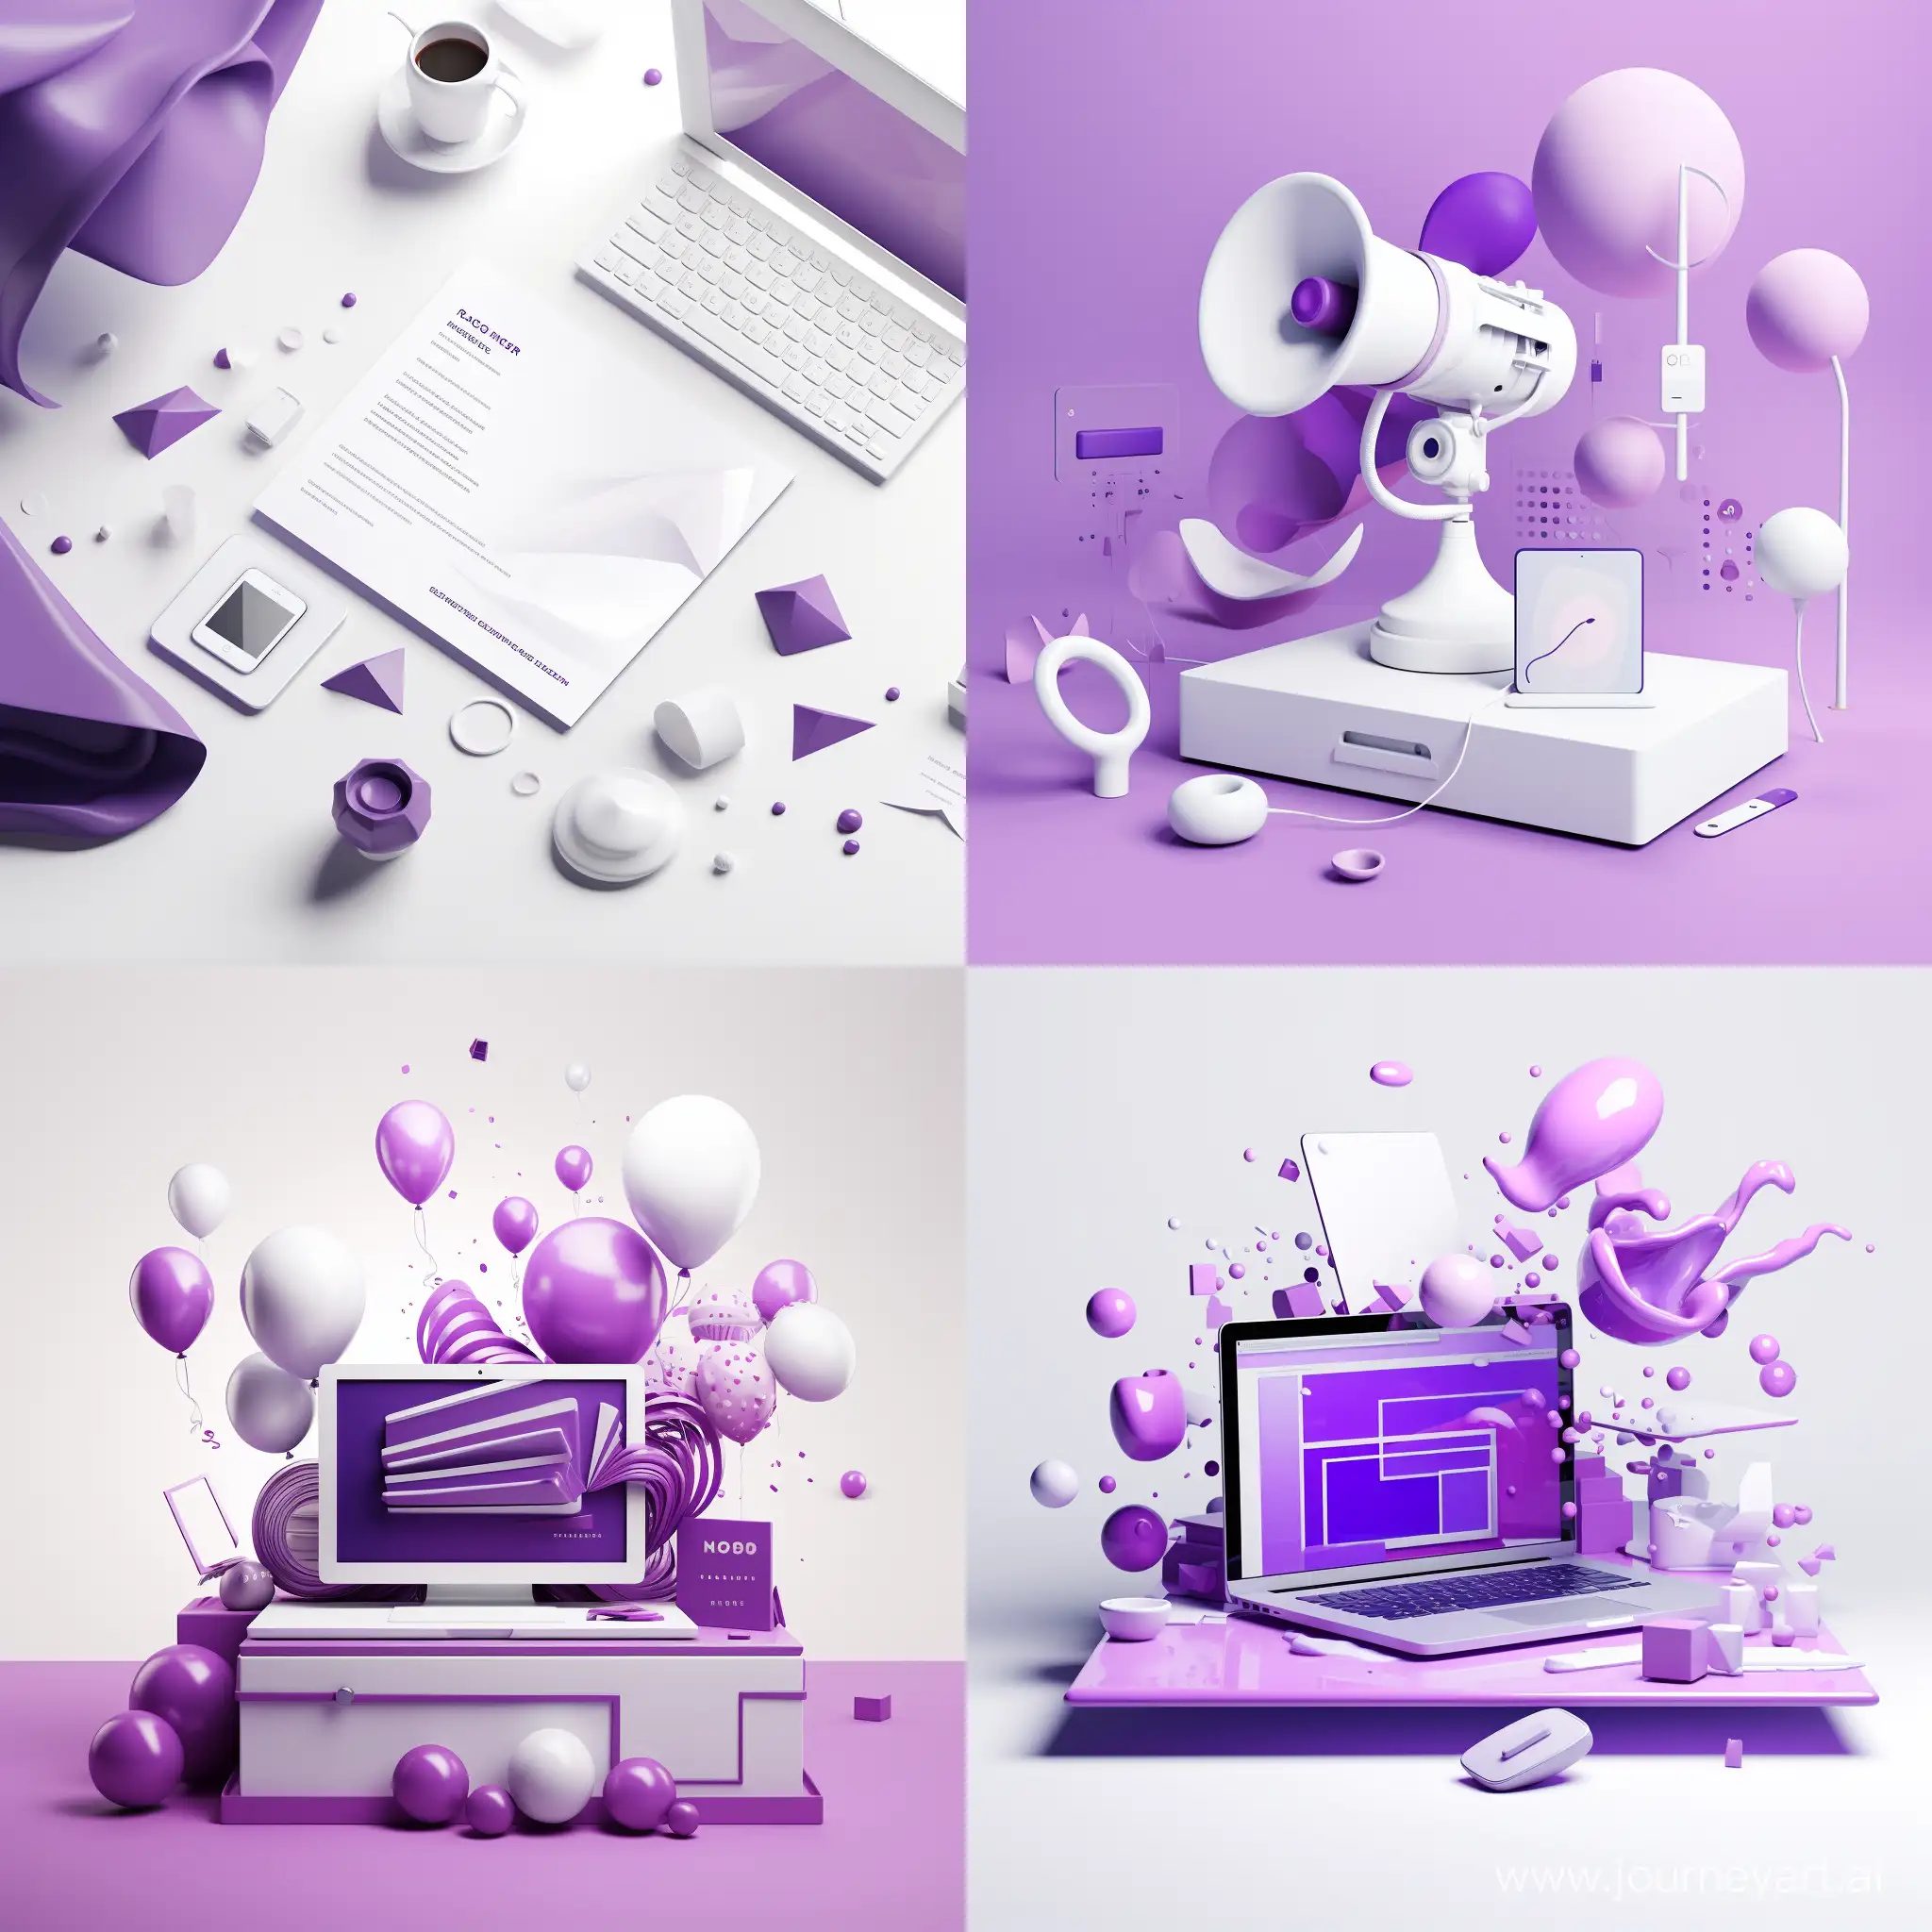 Marketing Communications3d Marketing Communications , purple  theme , white background, super minimal